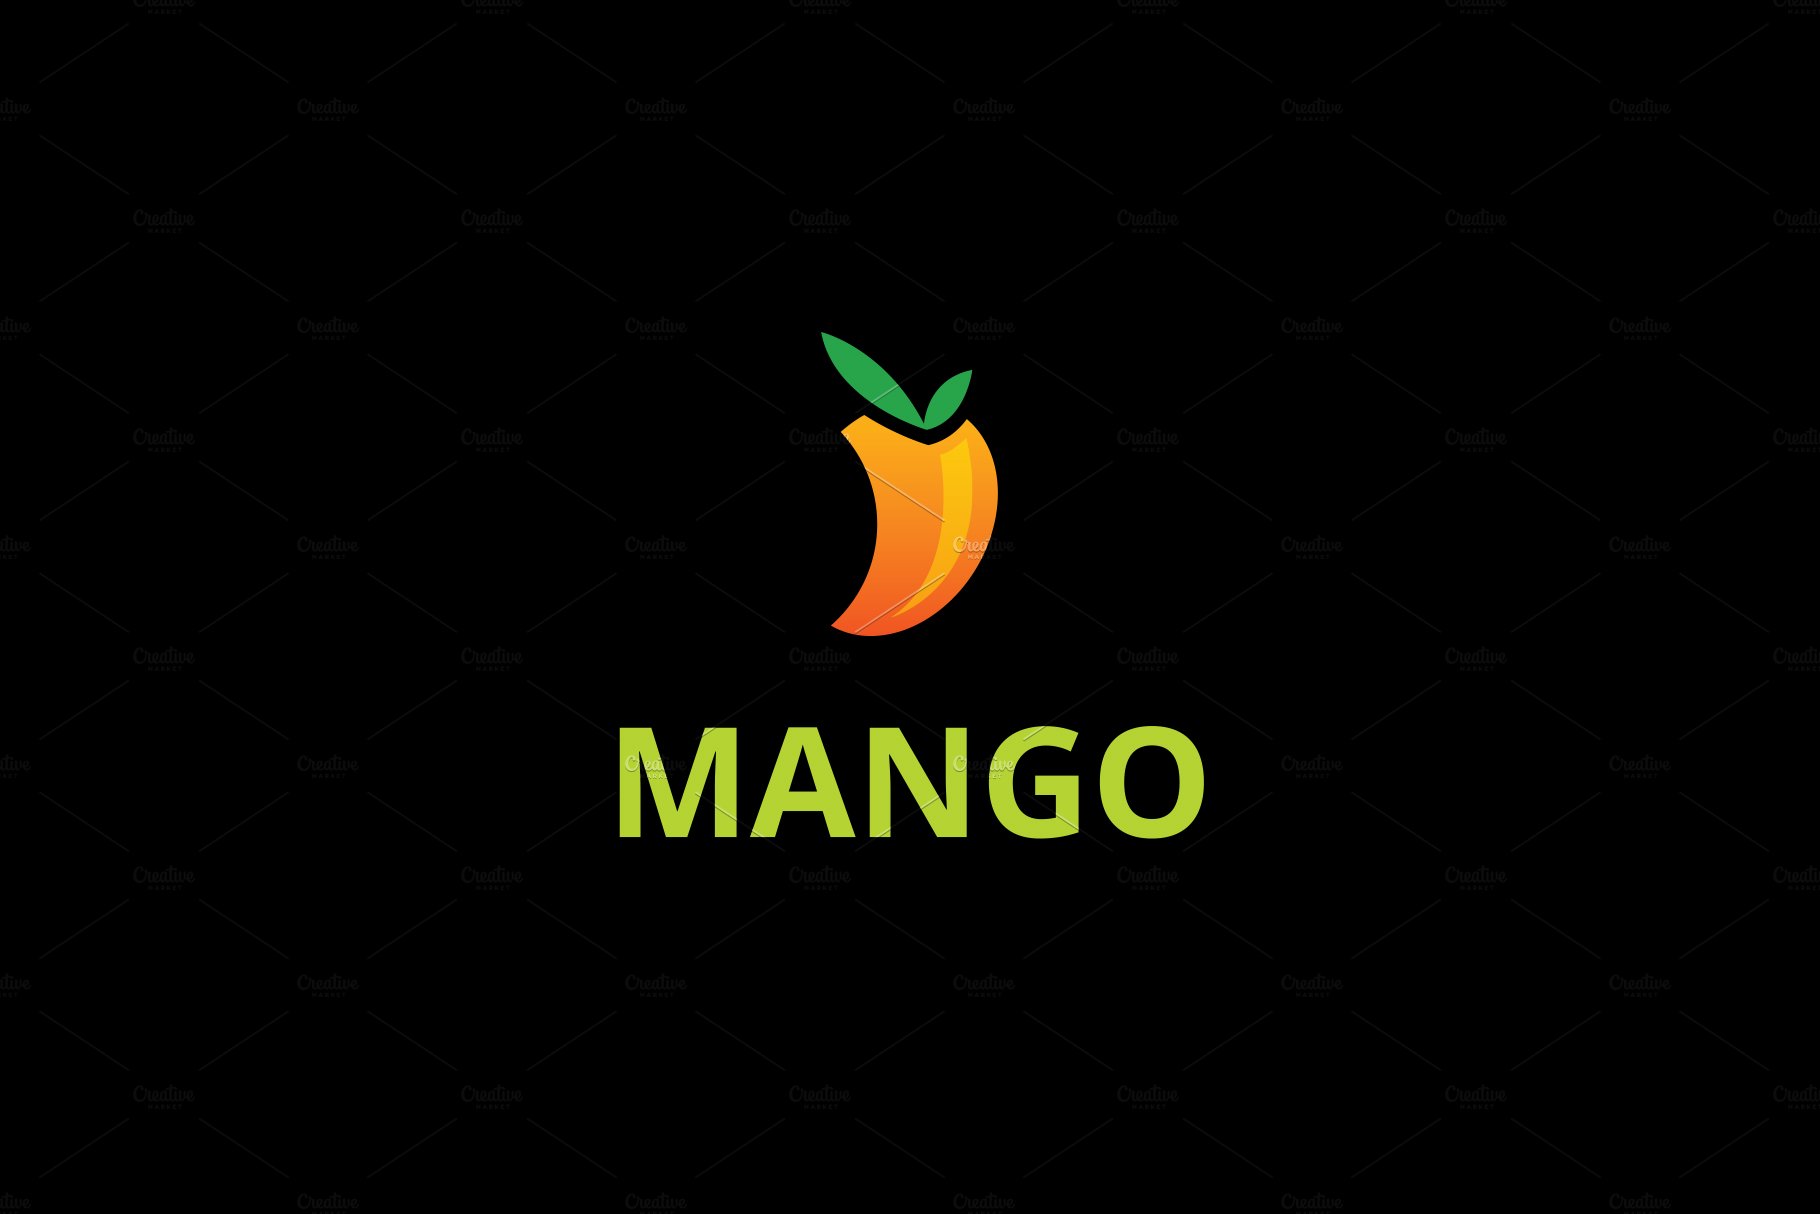 Mango Logo preview image.